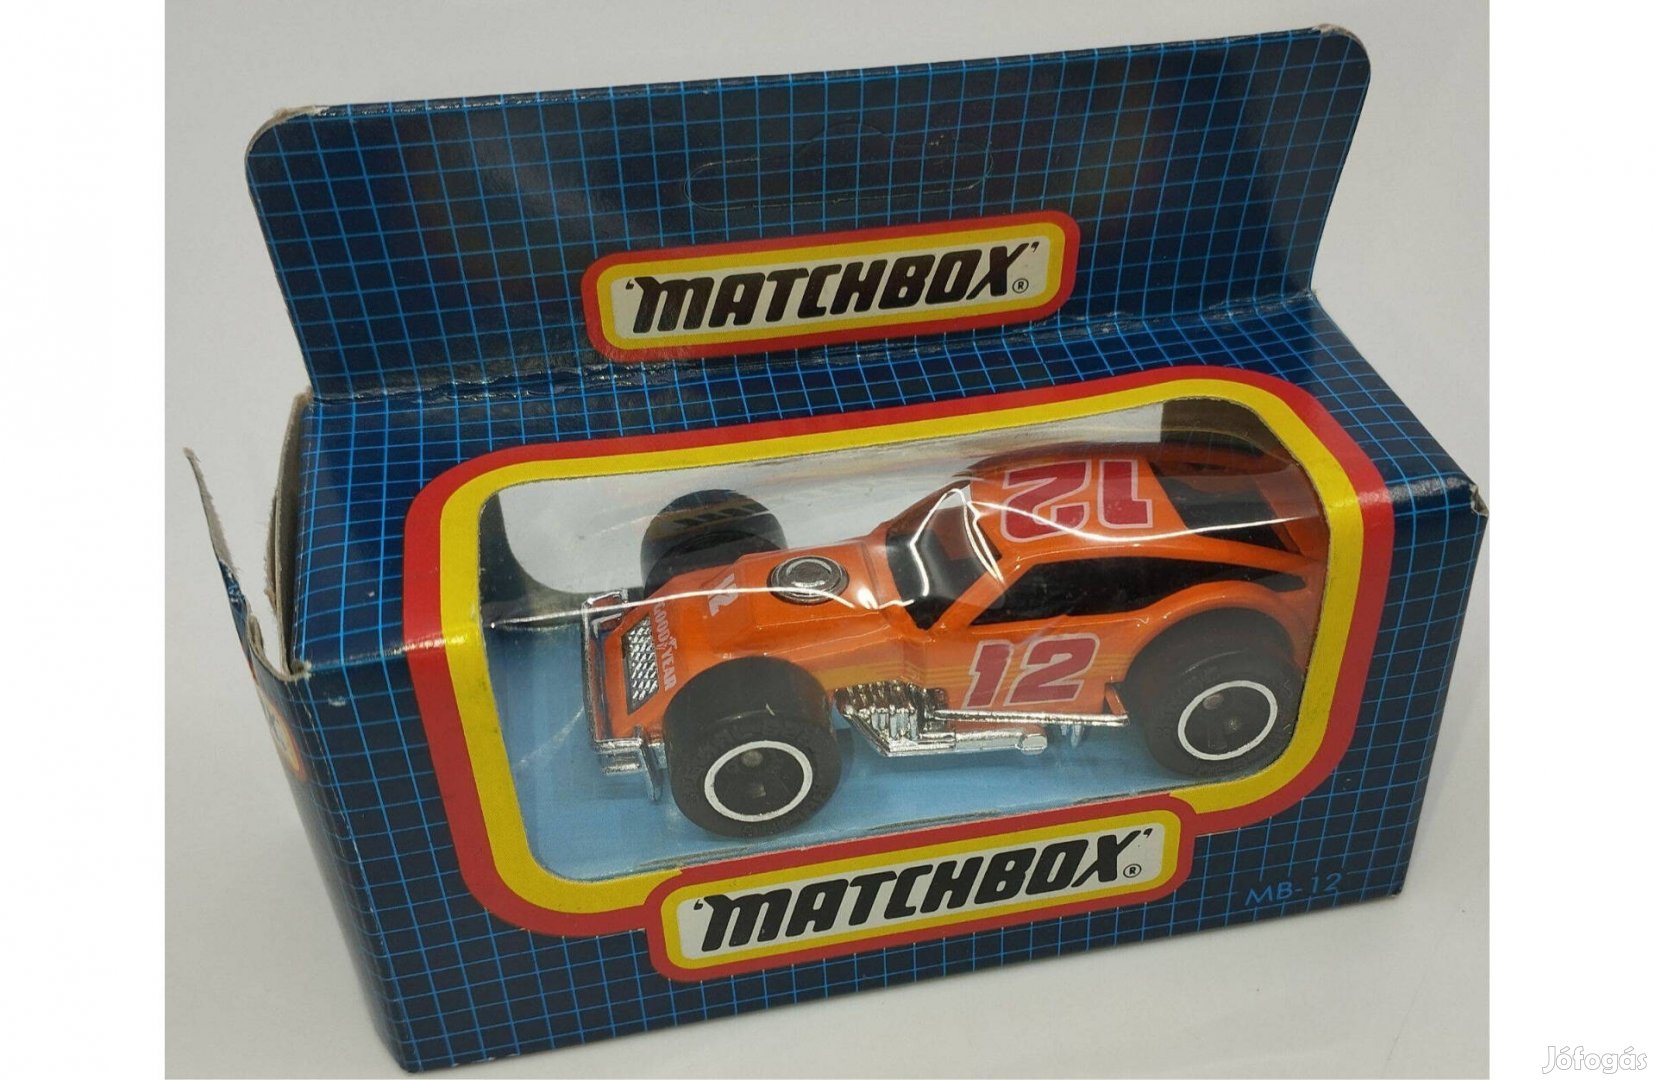 Matchbox MB-12 Modified Racer